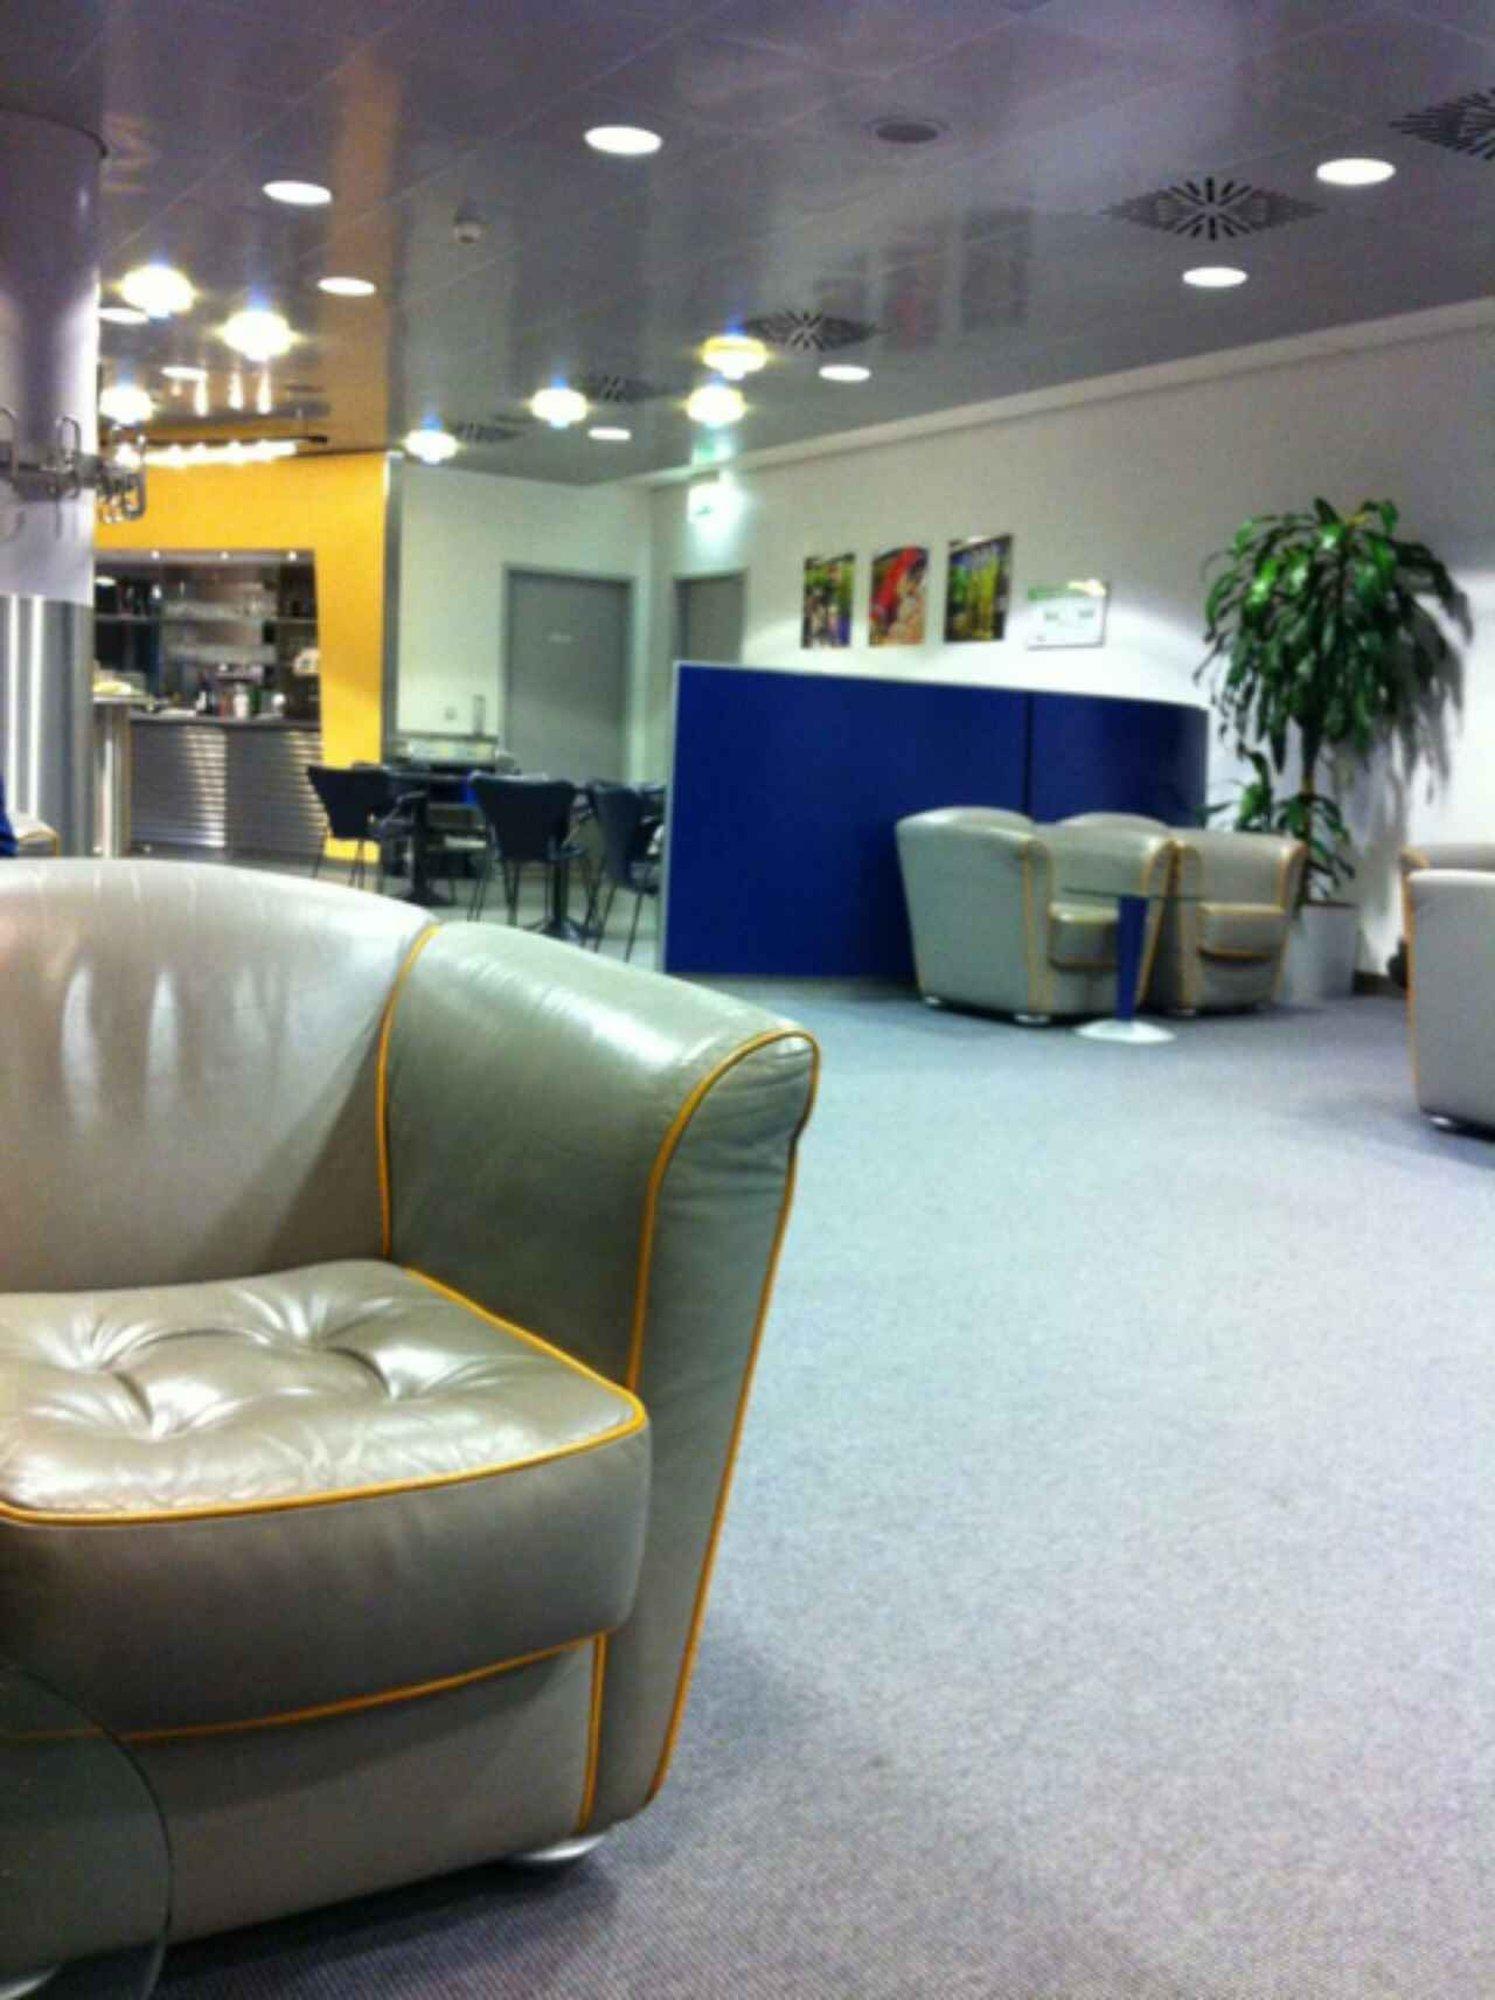 Lufthansa Business Lounge image 5 of 5